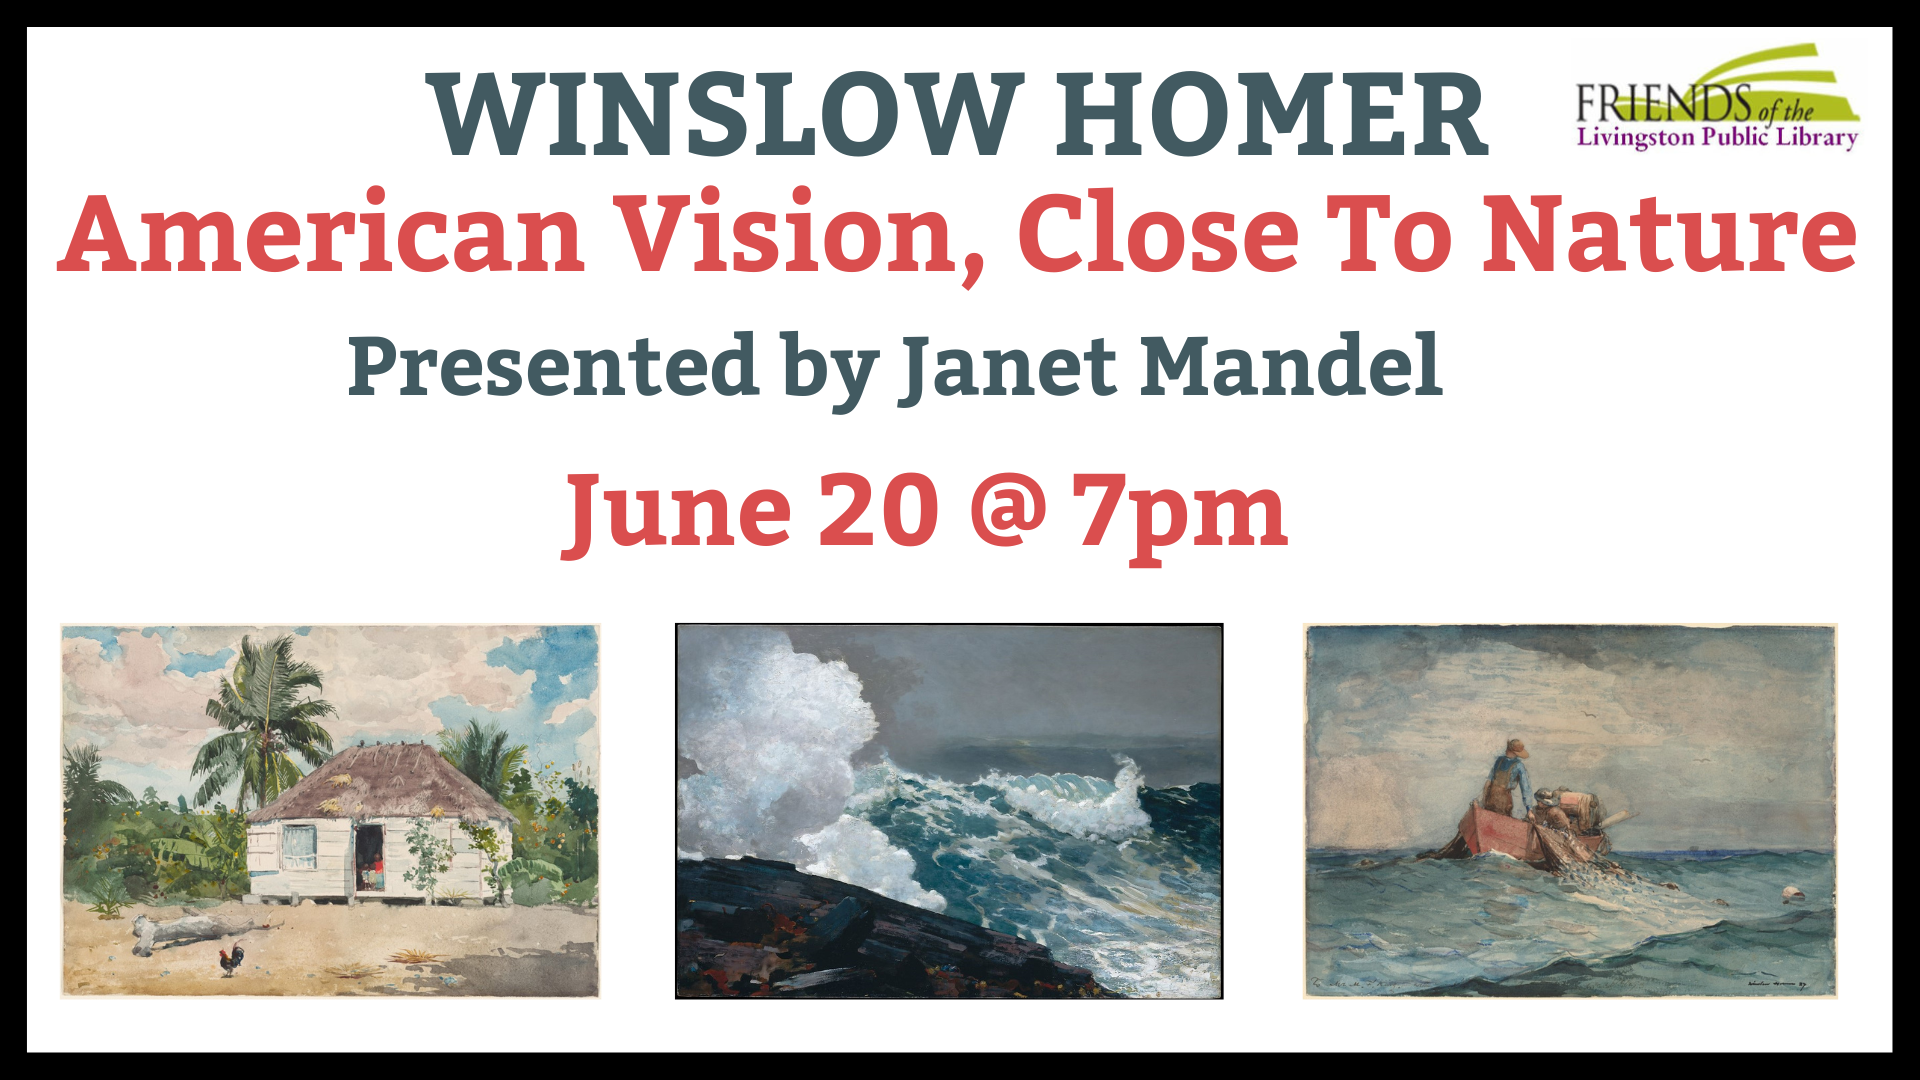 Winslow Homer presented by Janet Mandel